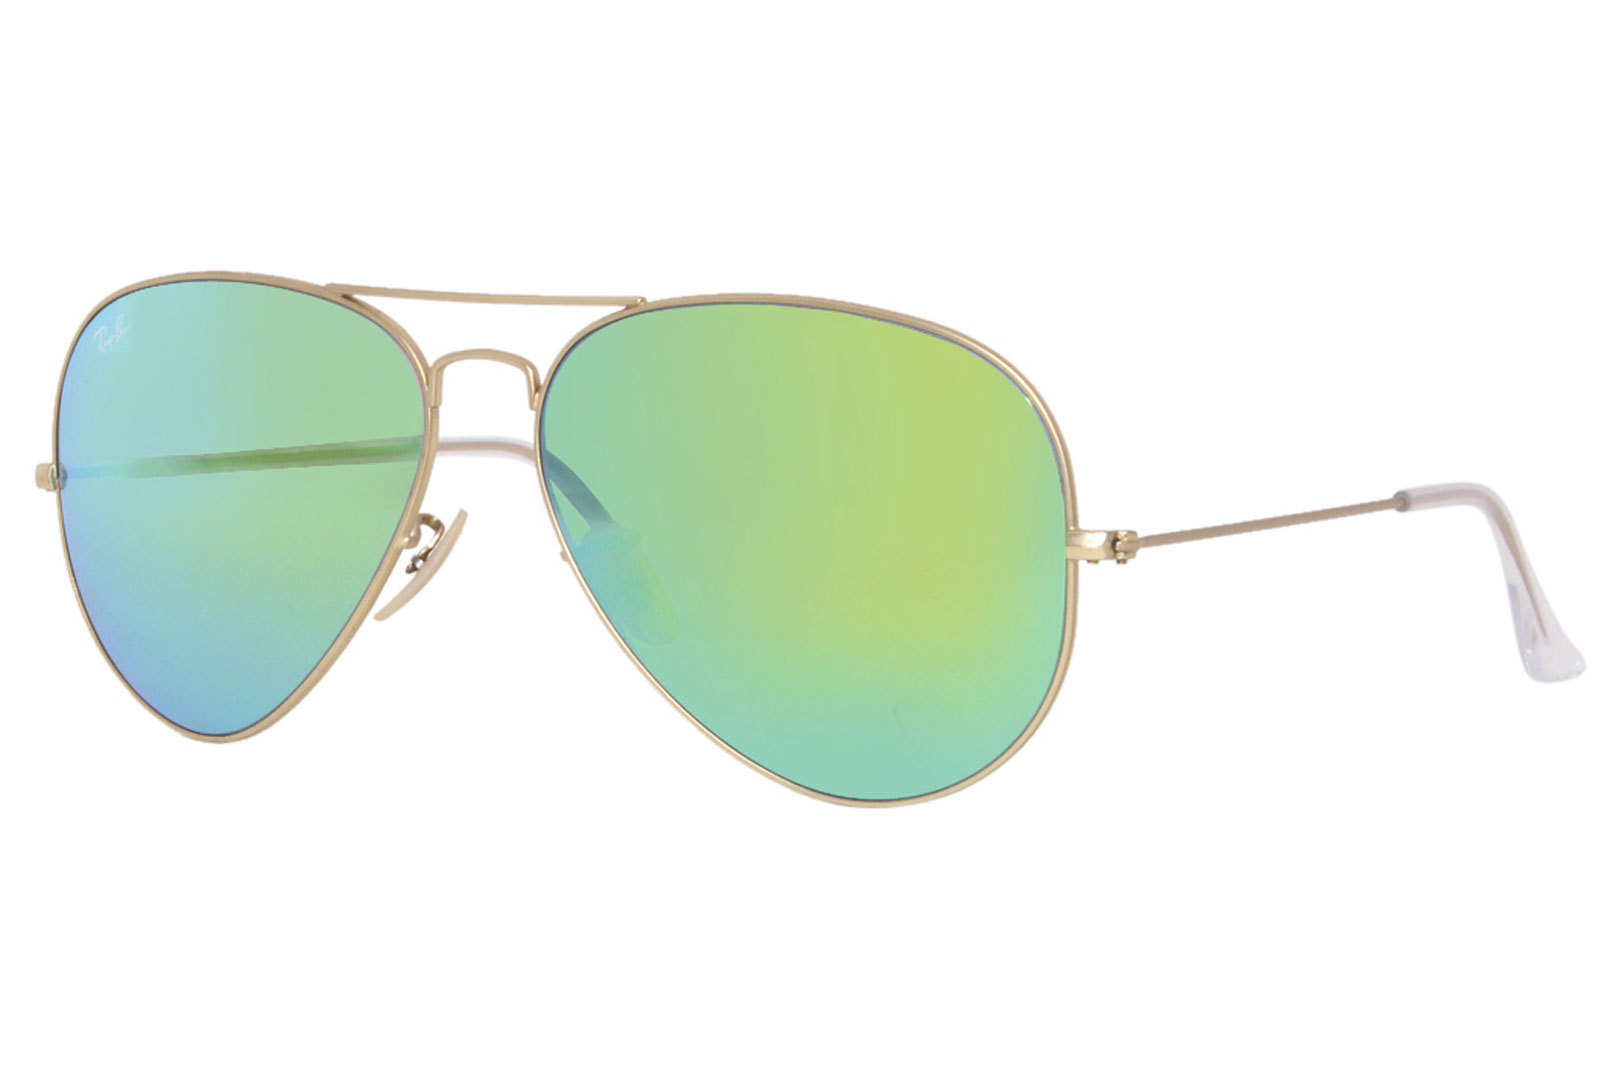 Ray Ban Classic Aviator Sunglasses RB3025 11219 Matte Gold/Green Mirror 62mm